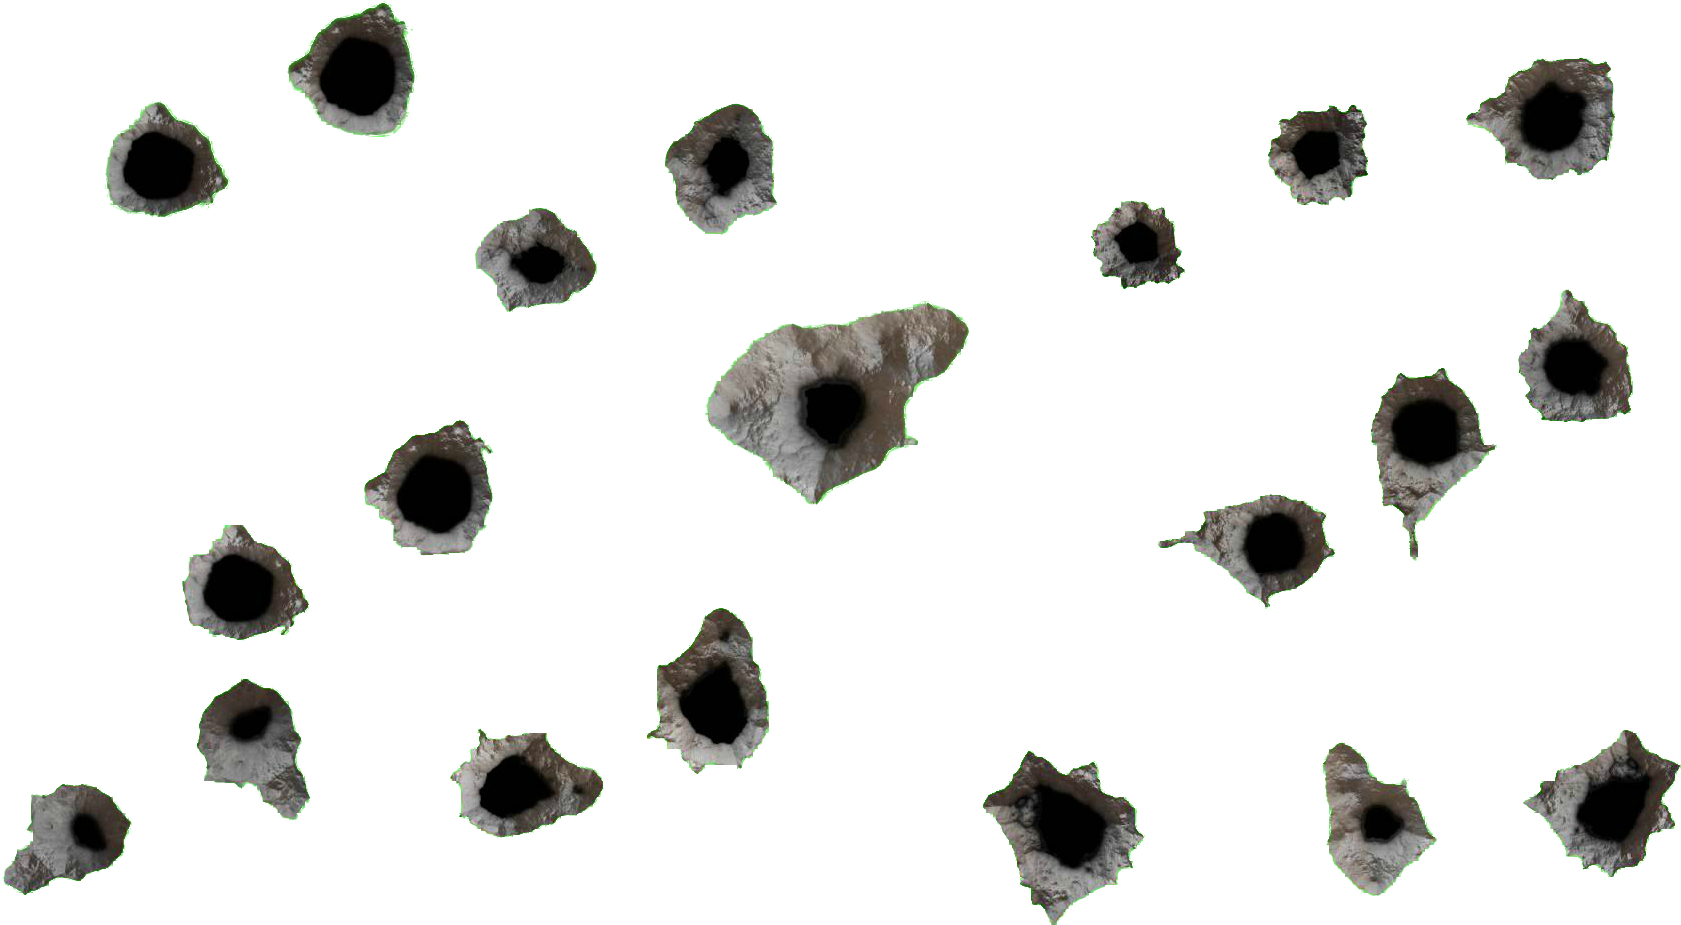 Image - Bullets Holes (1920x1080)